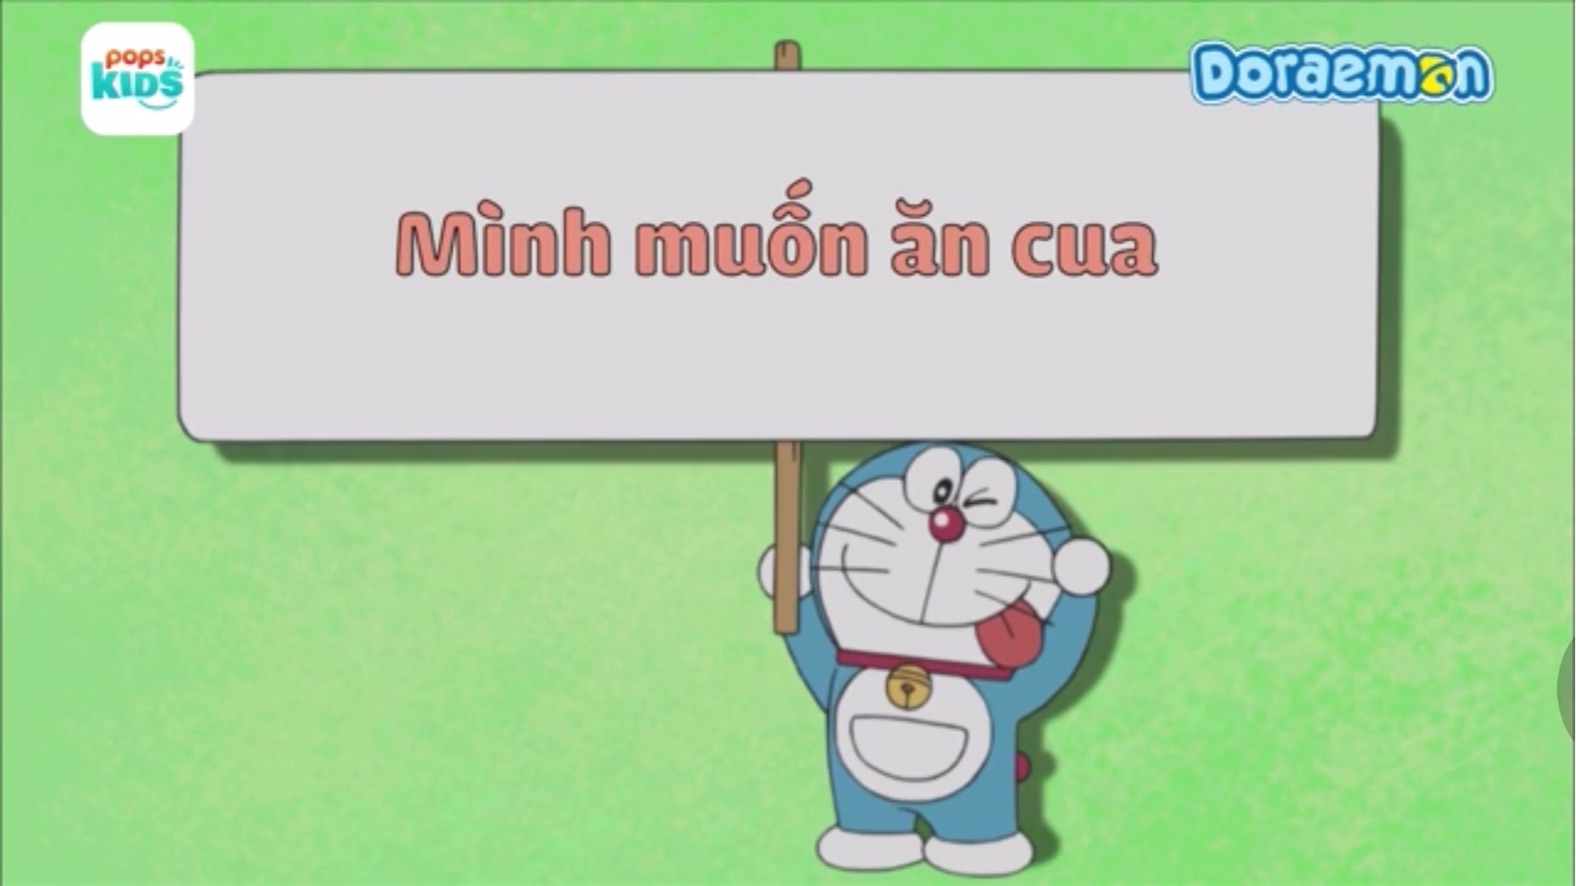 Doraemon tiếng việt tập 23 - Bilibili